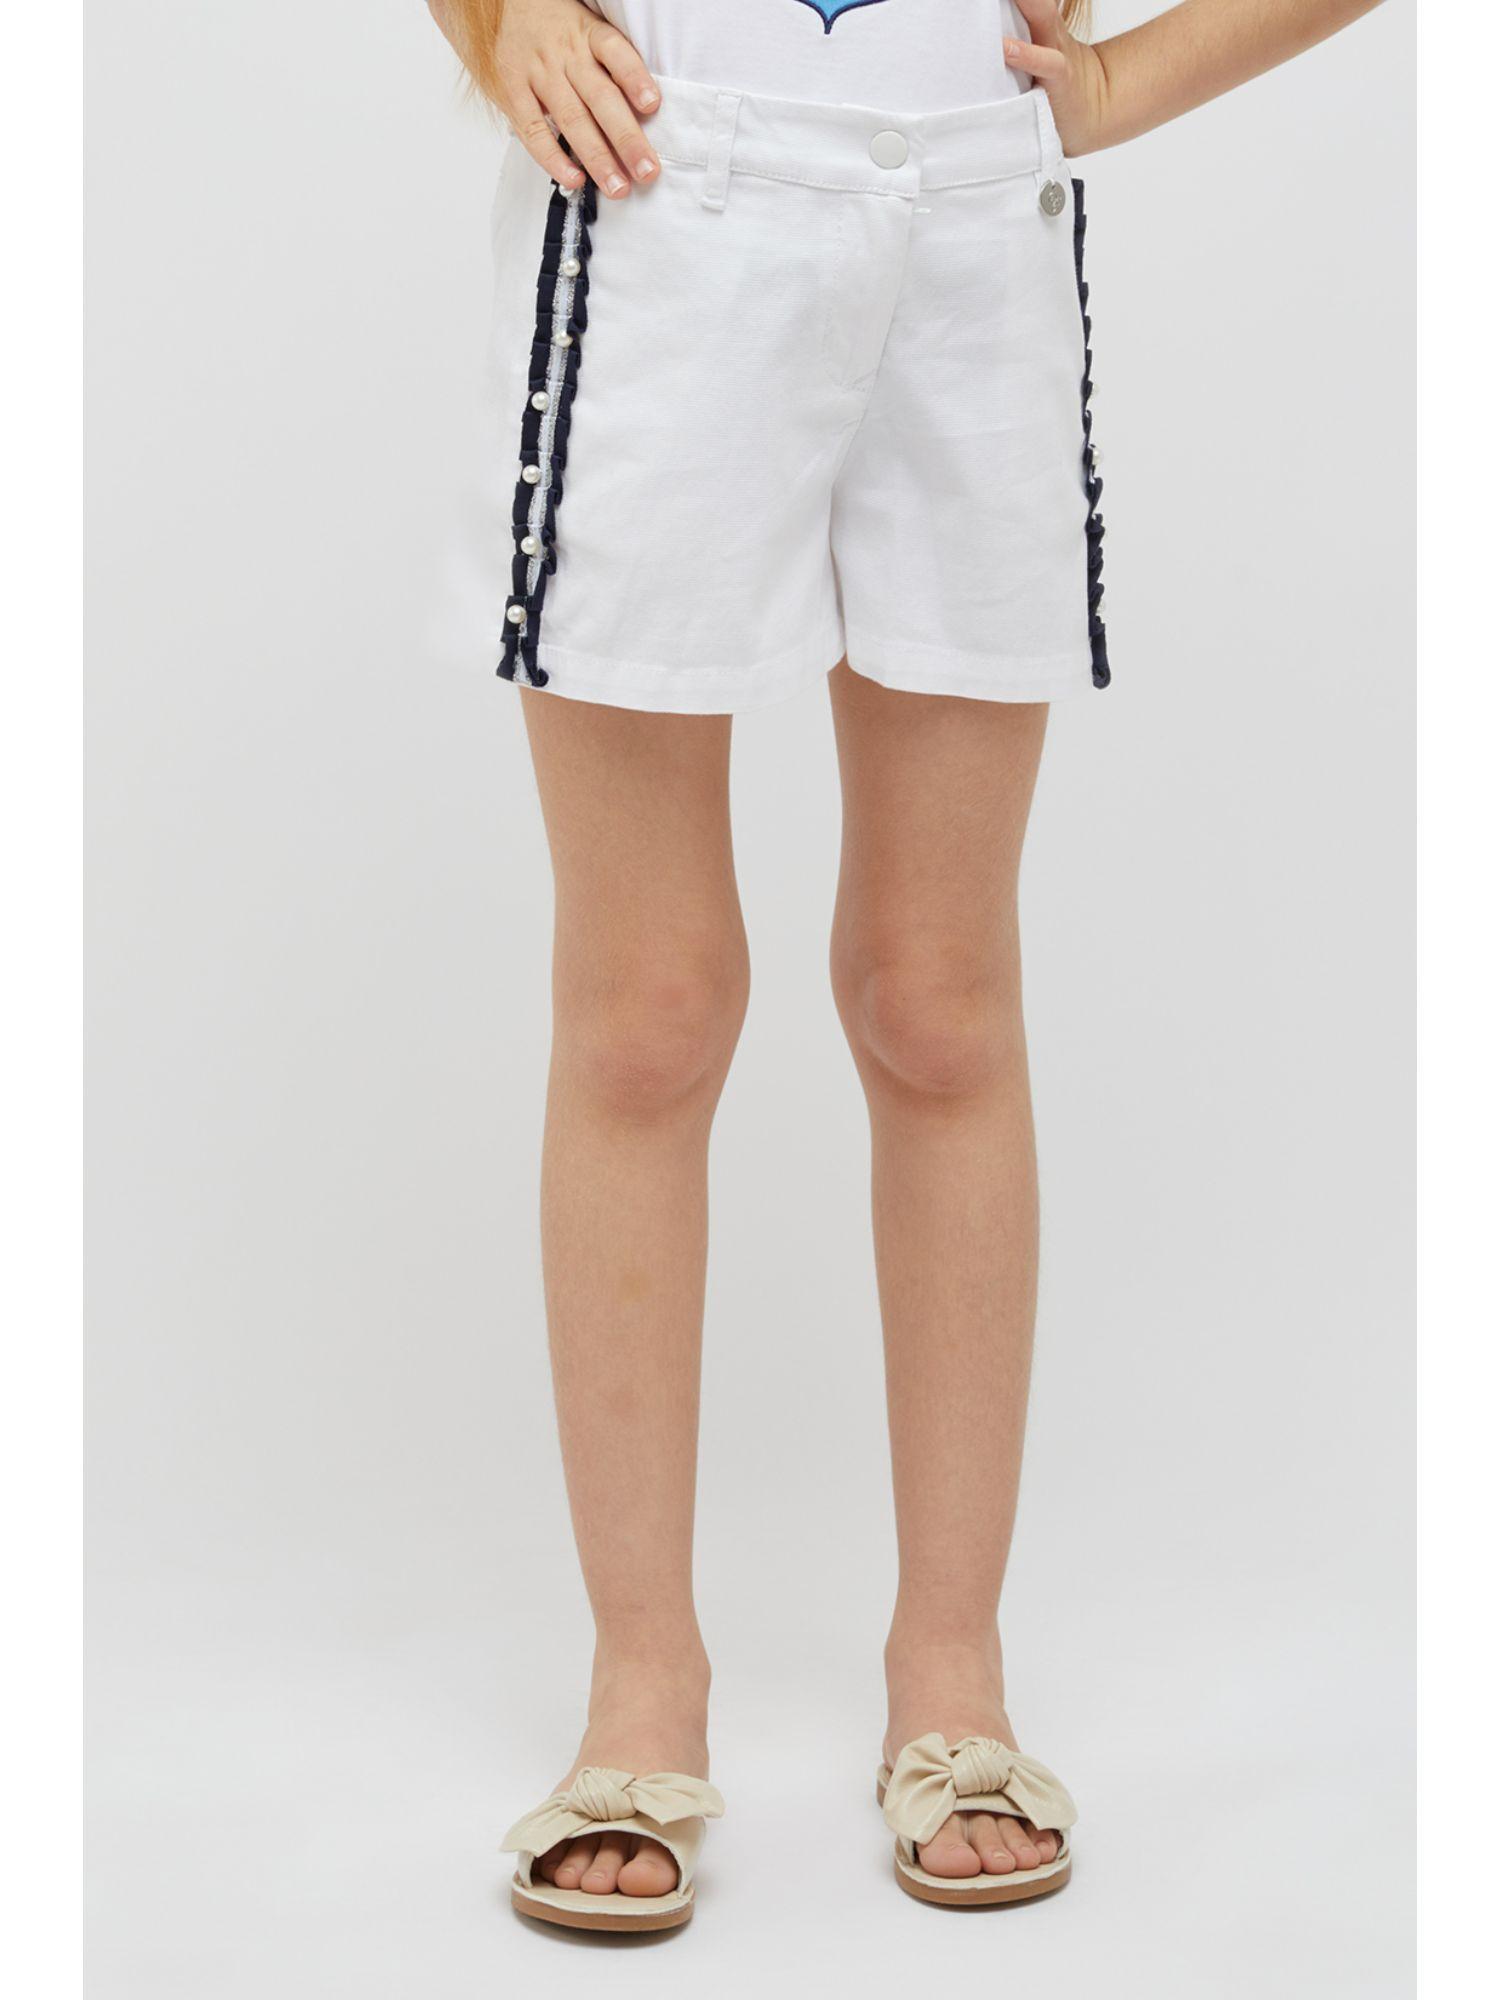 white patterned shorts